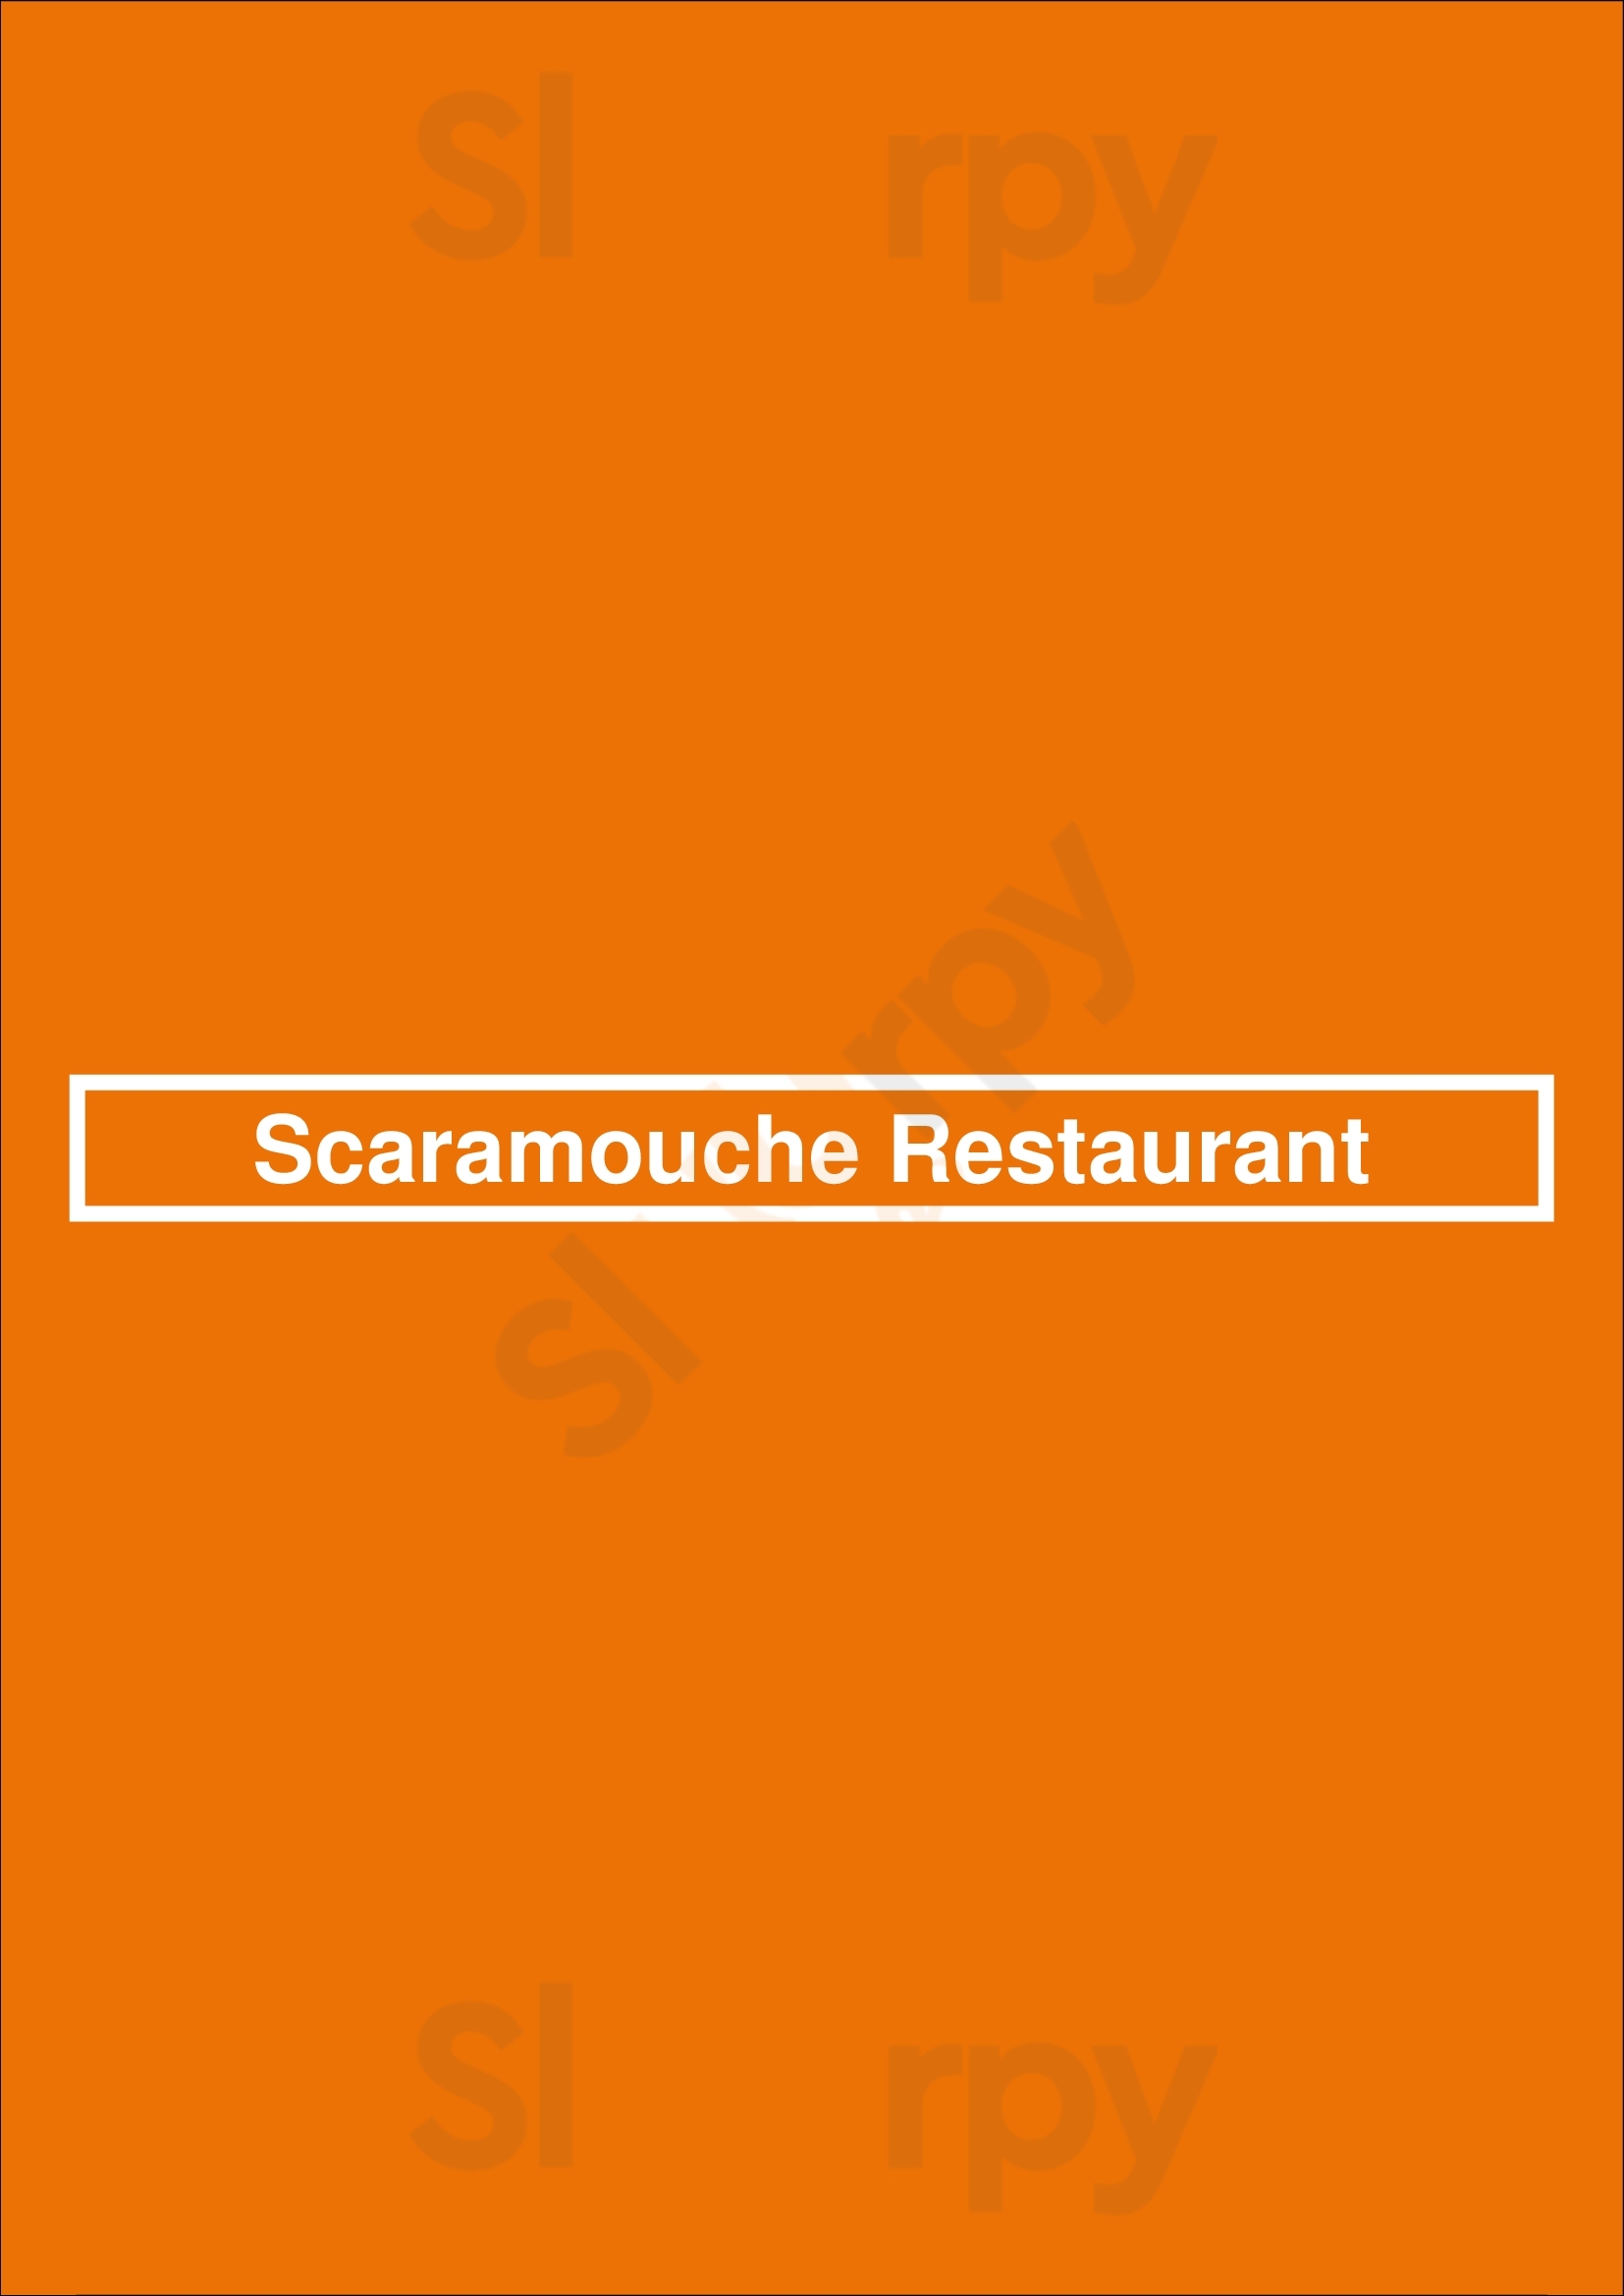 Scaramouche Restaurant Toronto Menu - 1